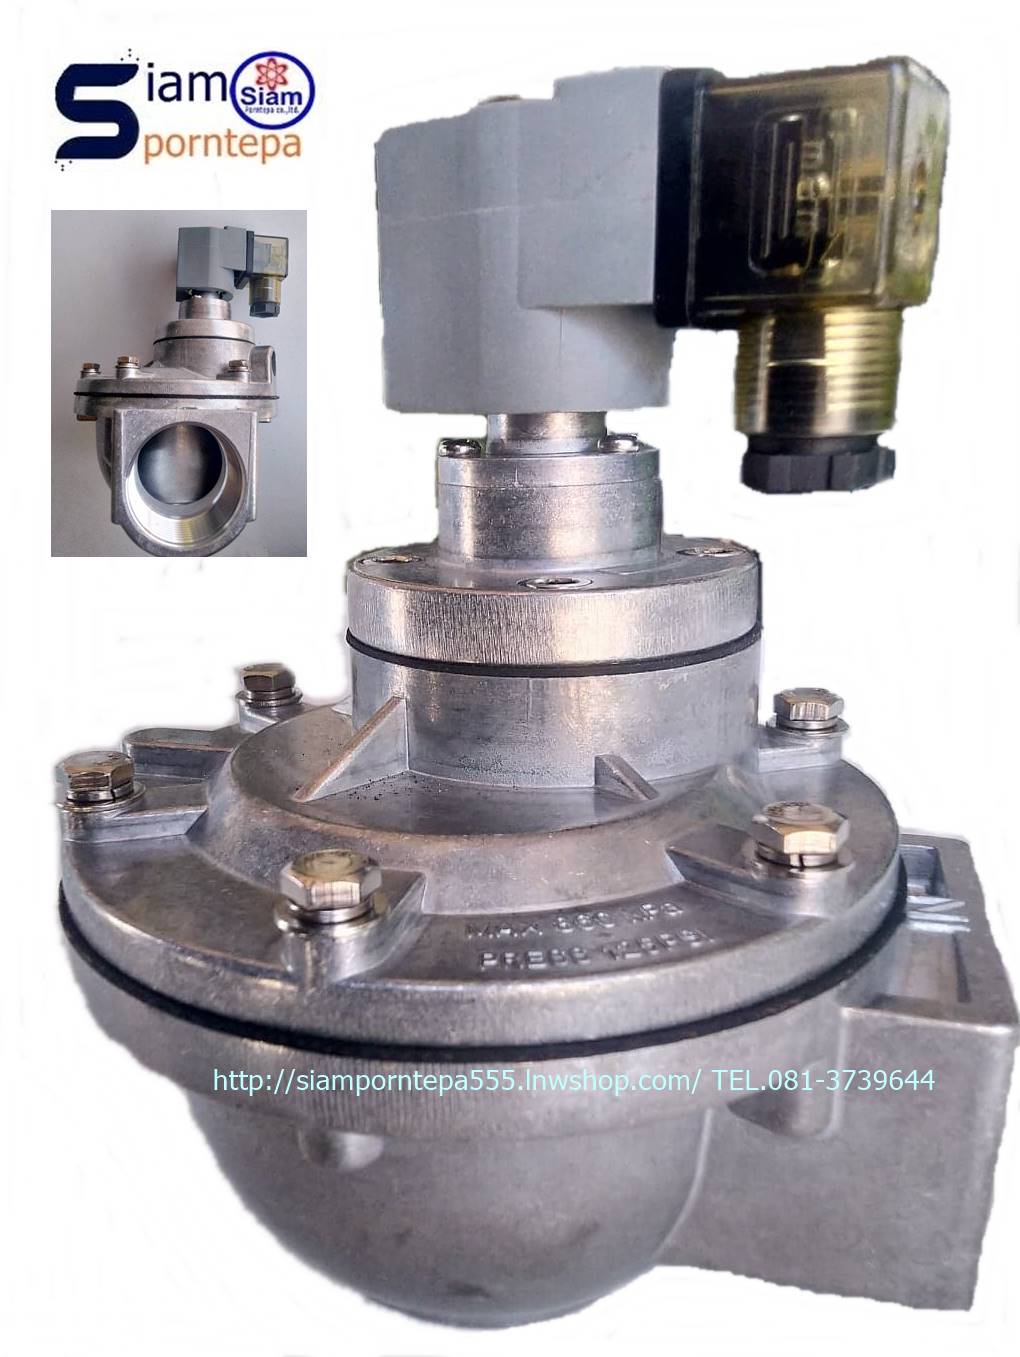 EMCF-15-24DC Pulse valve size 1/2" วาล์วกระทุ้งฝุ่น วาล์วกระแทกฝุ่น ส่งฟรีทั่วประเทศ